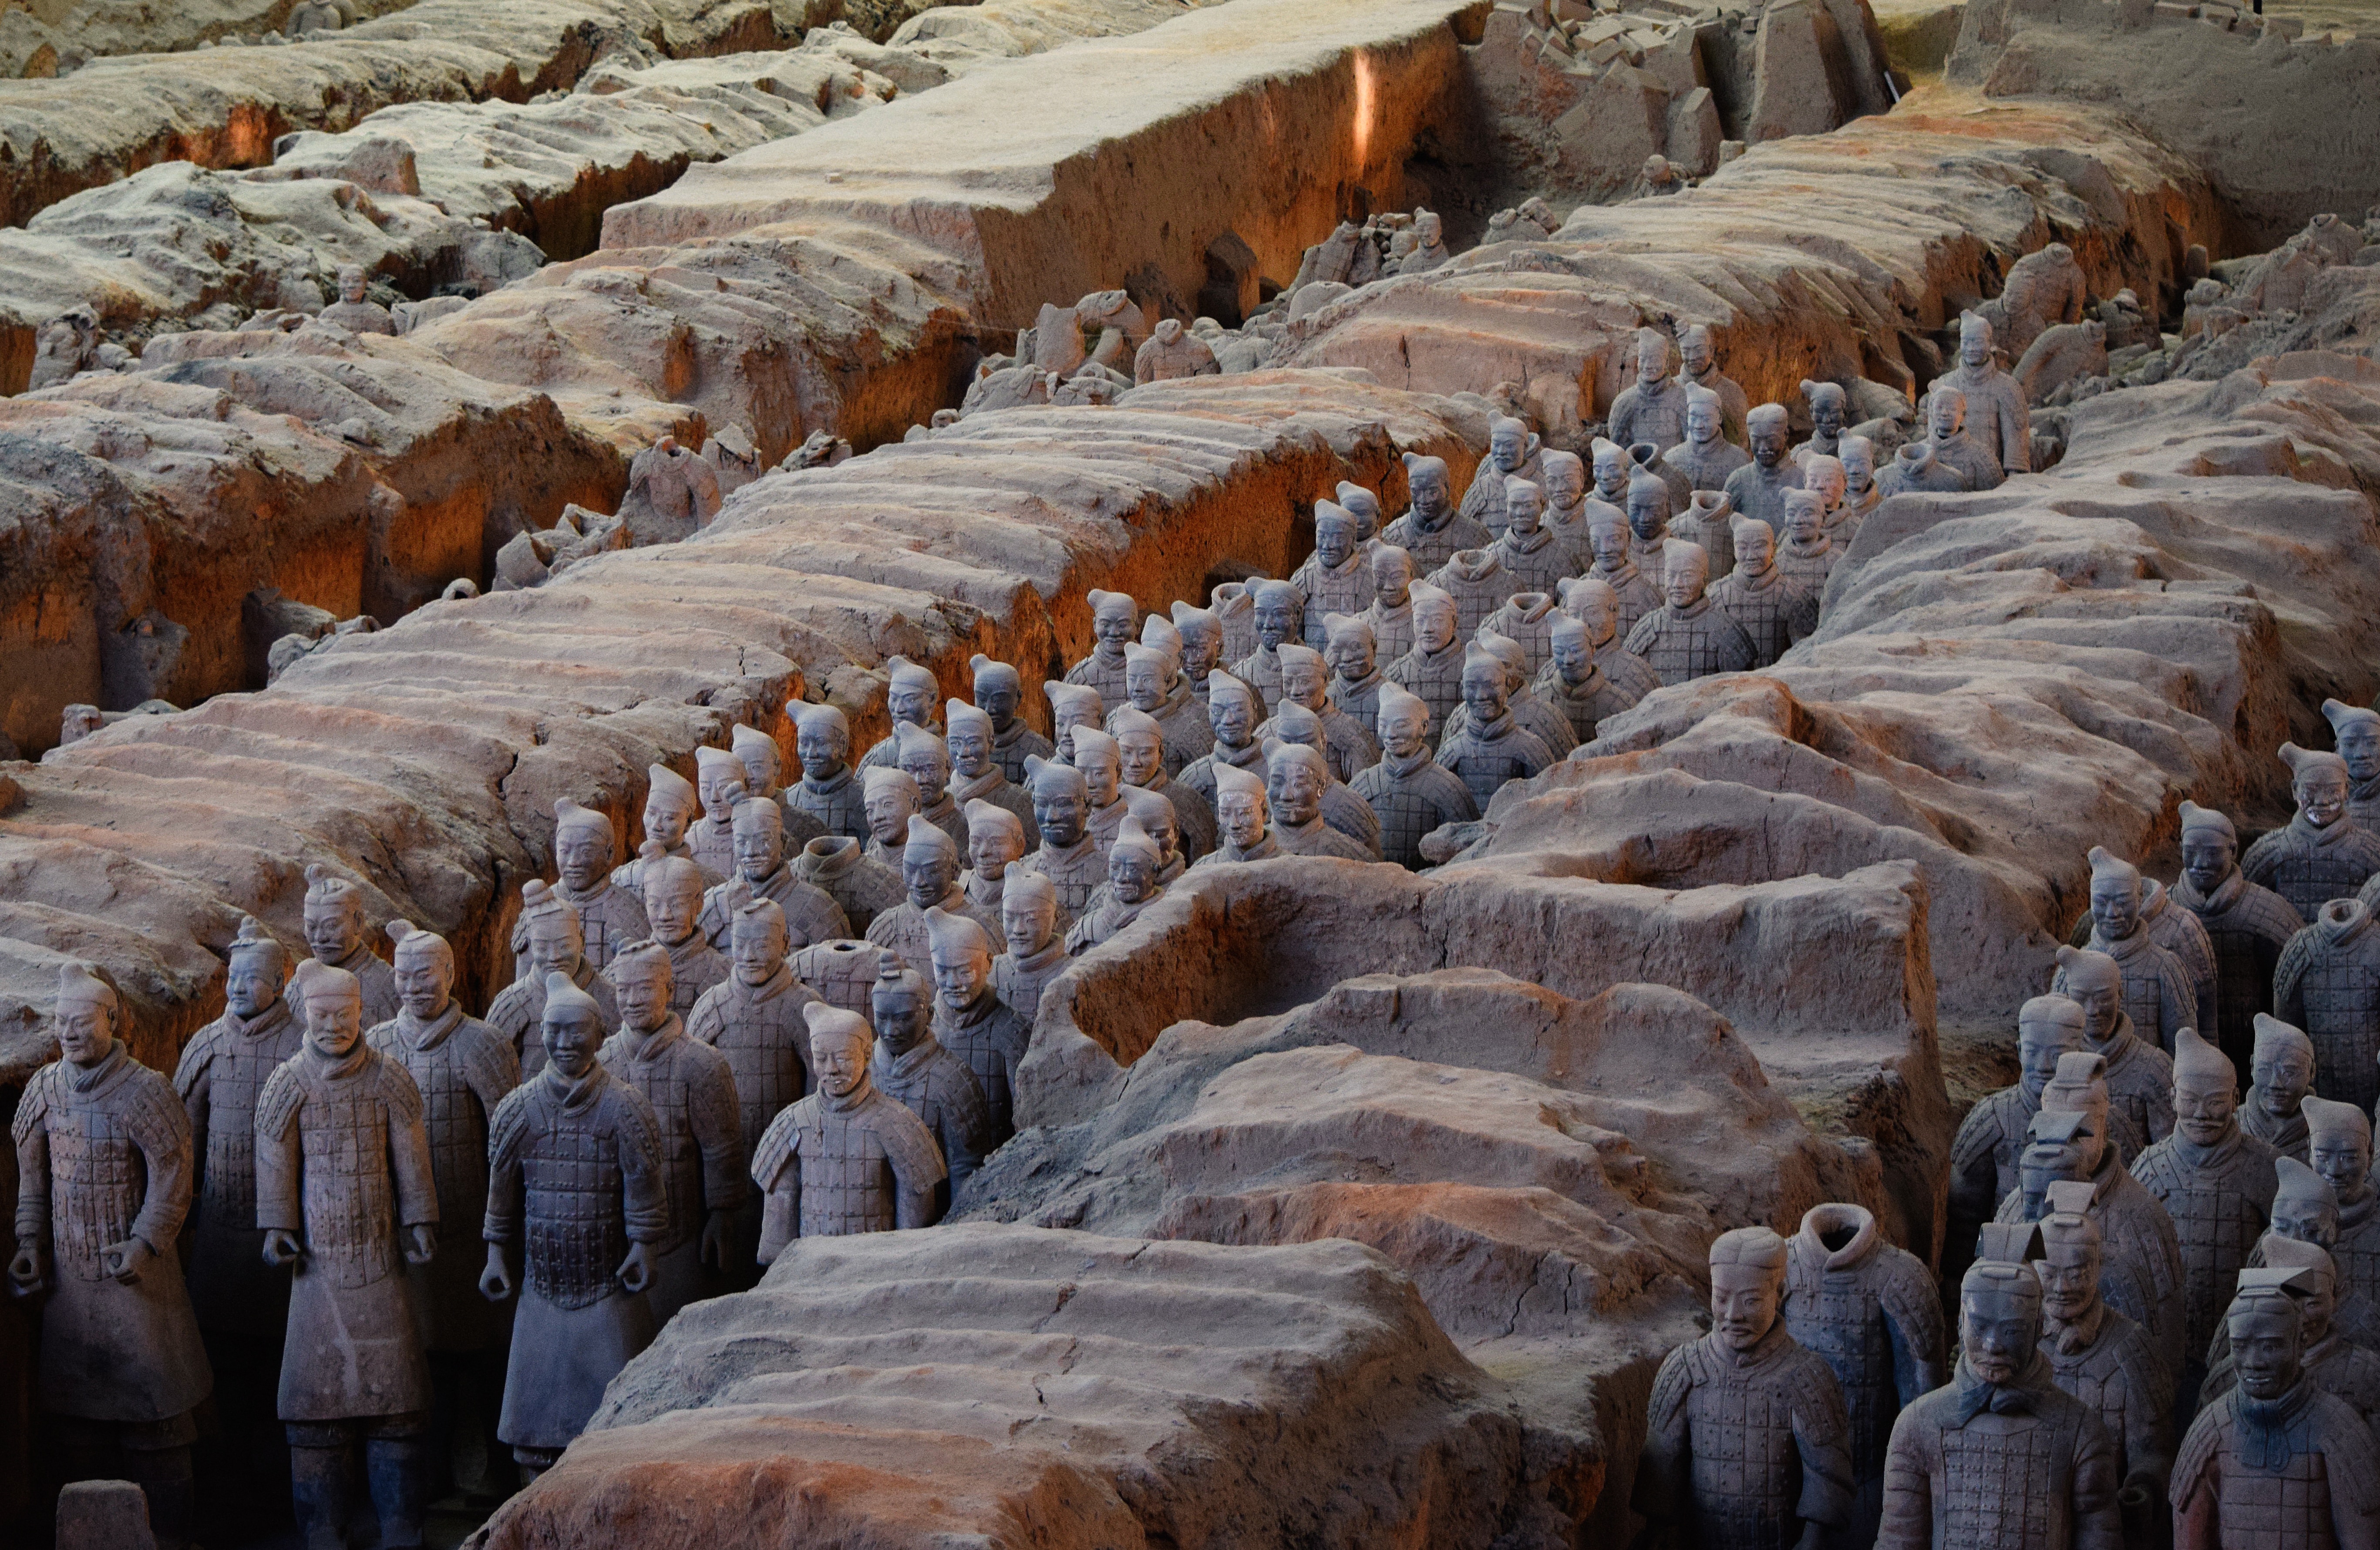 terracotta warriors stone statues